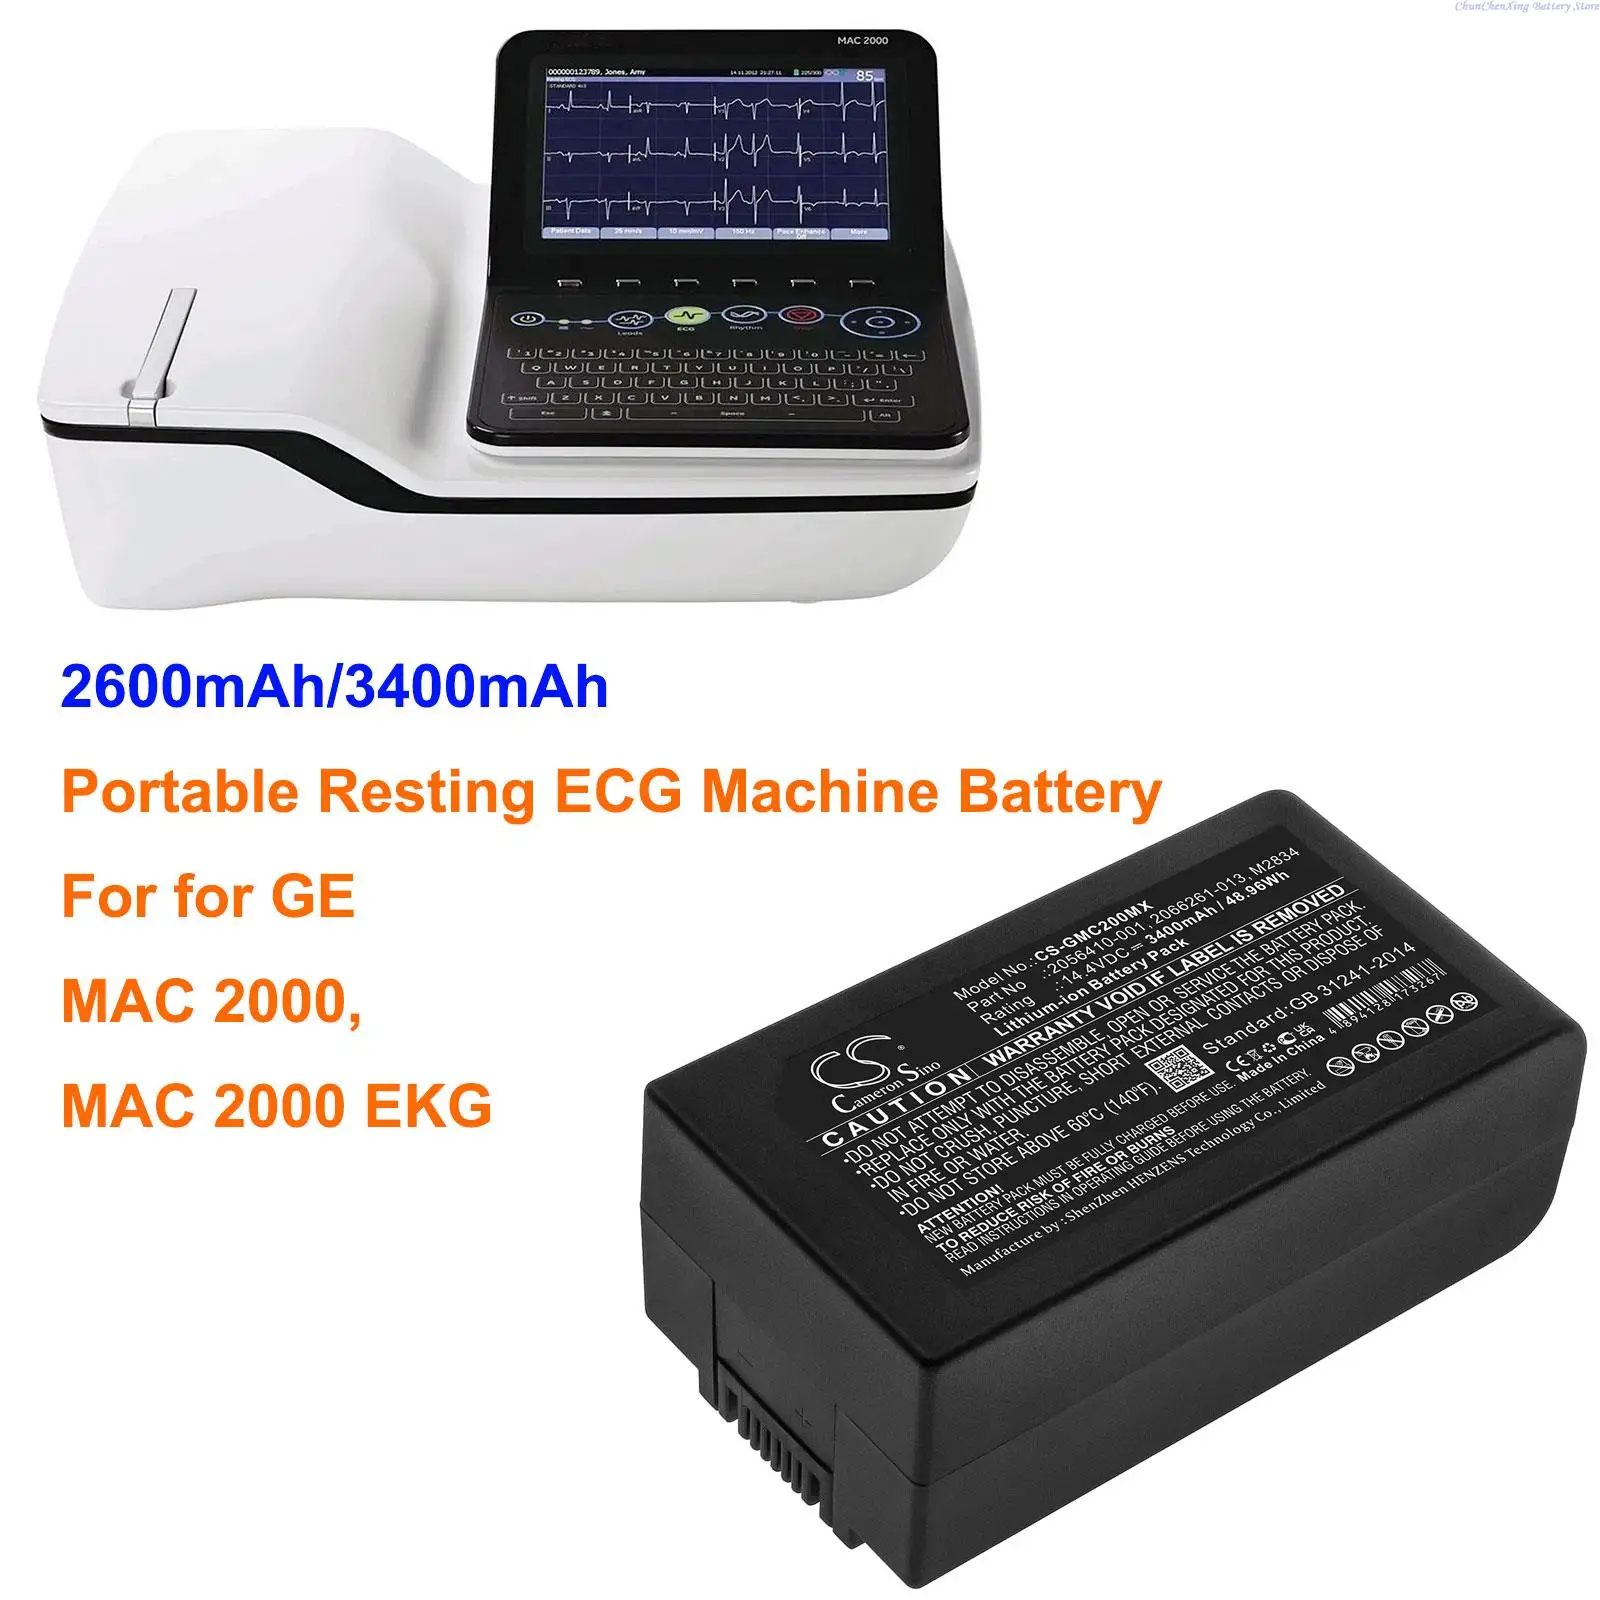 

OrangeYu 2600mAh/3400mAh Portable Resting ECG Machine Battery M2834,2056410-001,2066261-013 for GE MAC 2000, MAC 2000 EKG